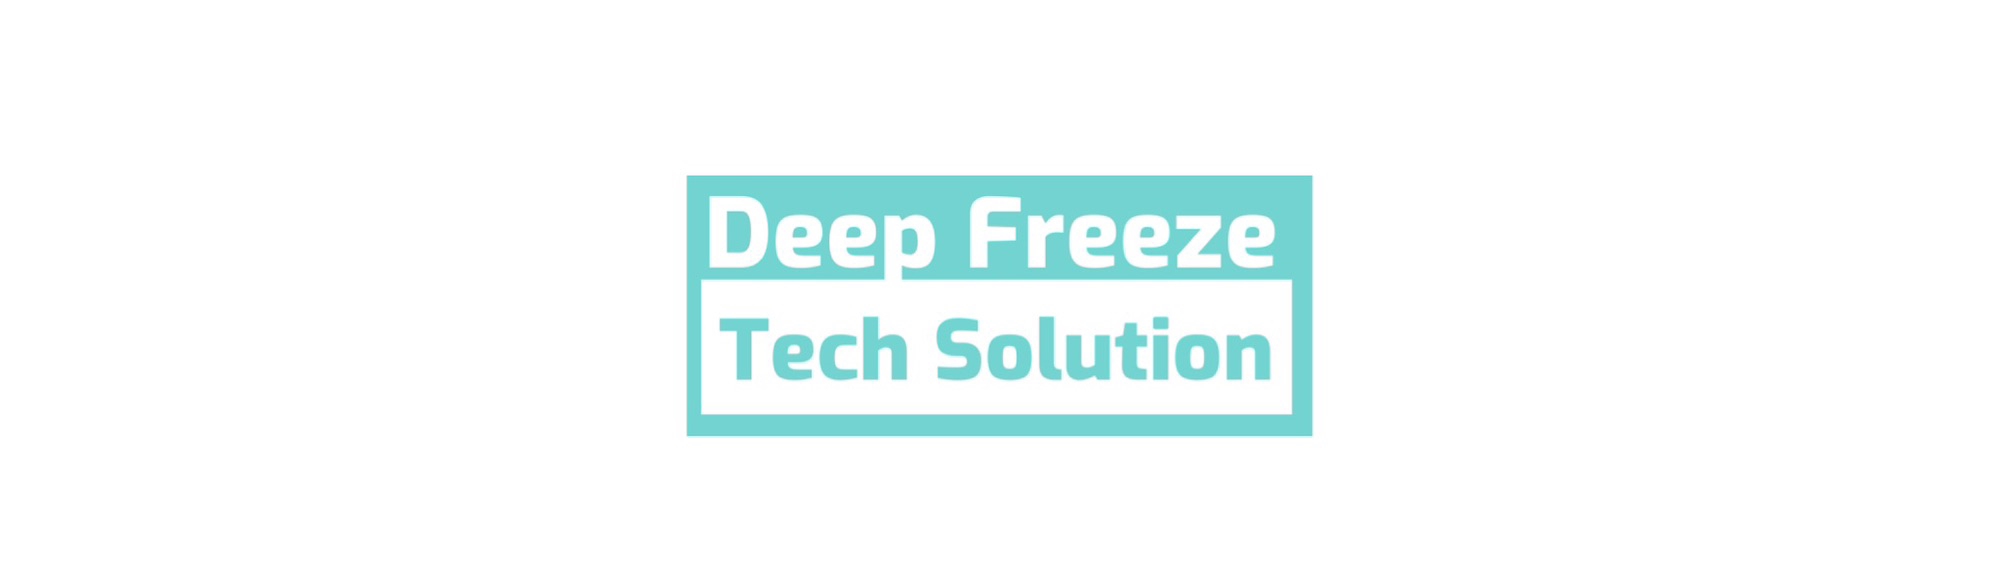 PRODUCTS / 商品ラインナップ | Deep Freeze Tech Solution/❄︎ICE